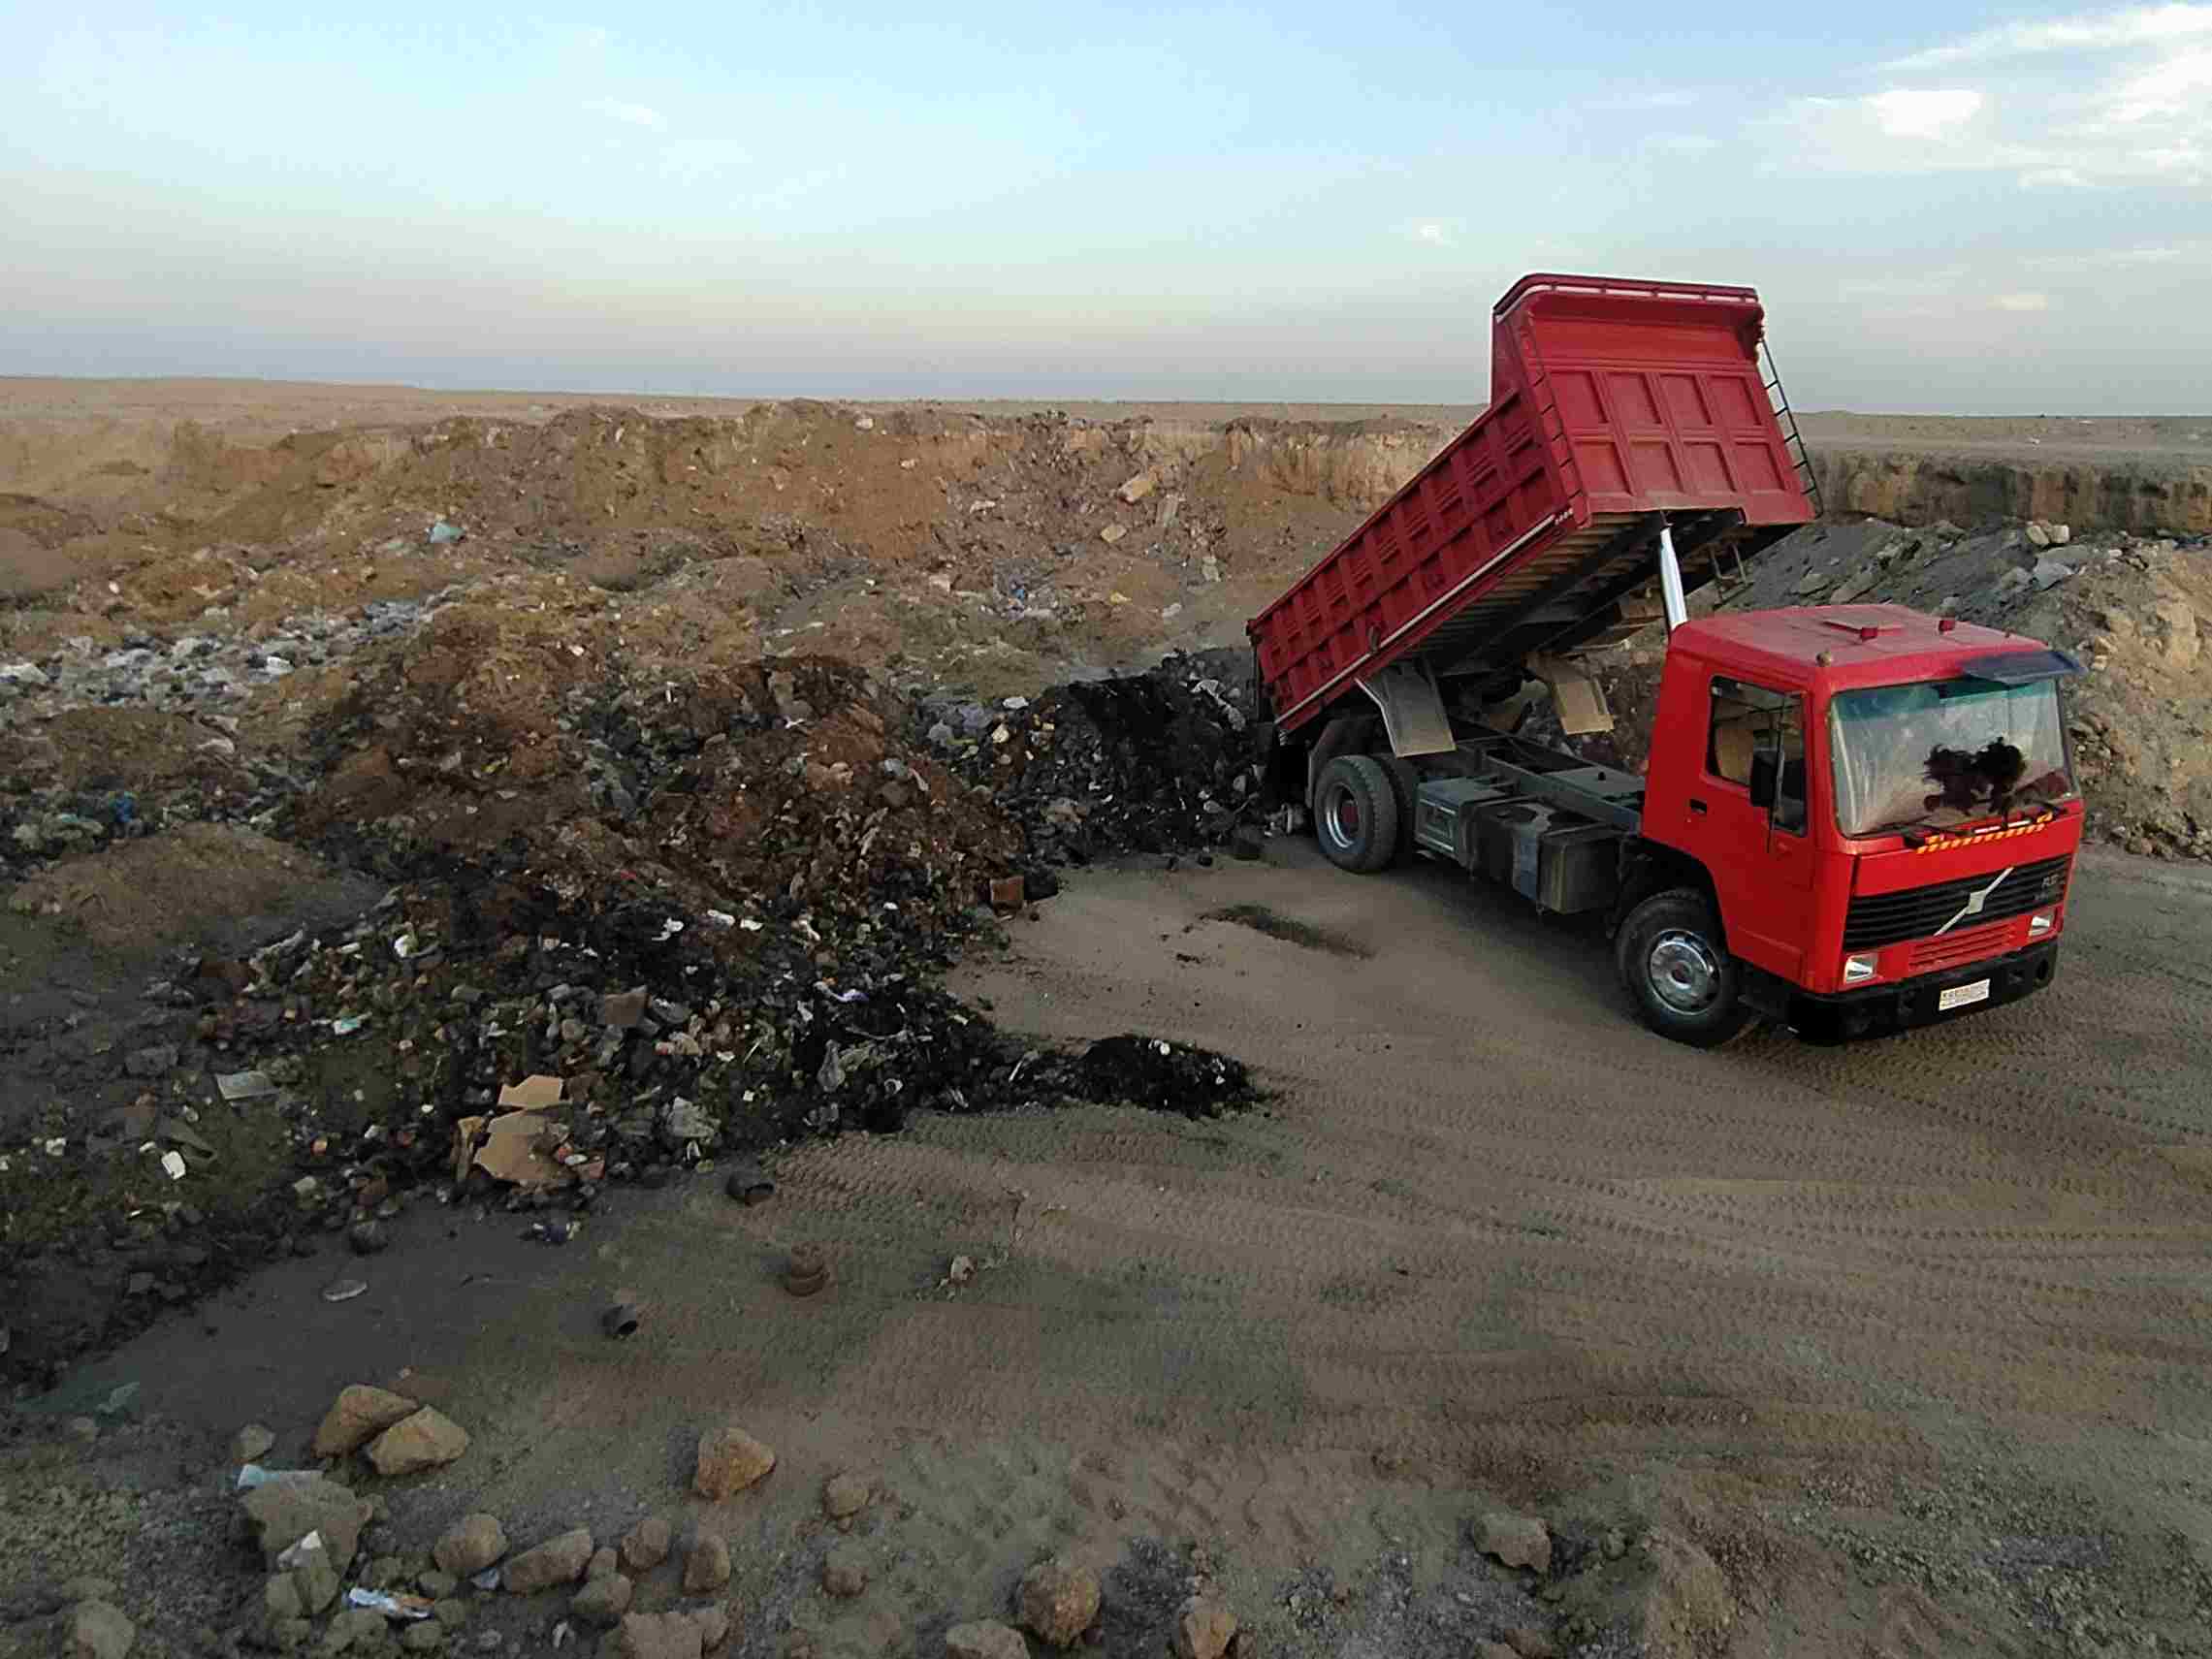 Roter Kipplader entleert Ladung an Mülldeponie vor offener Landschaft